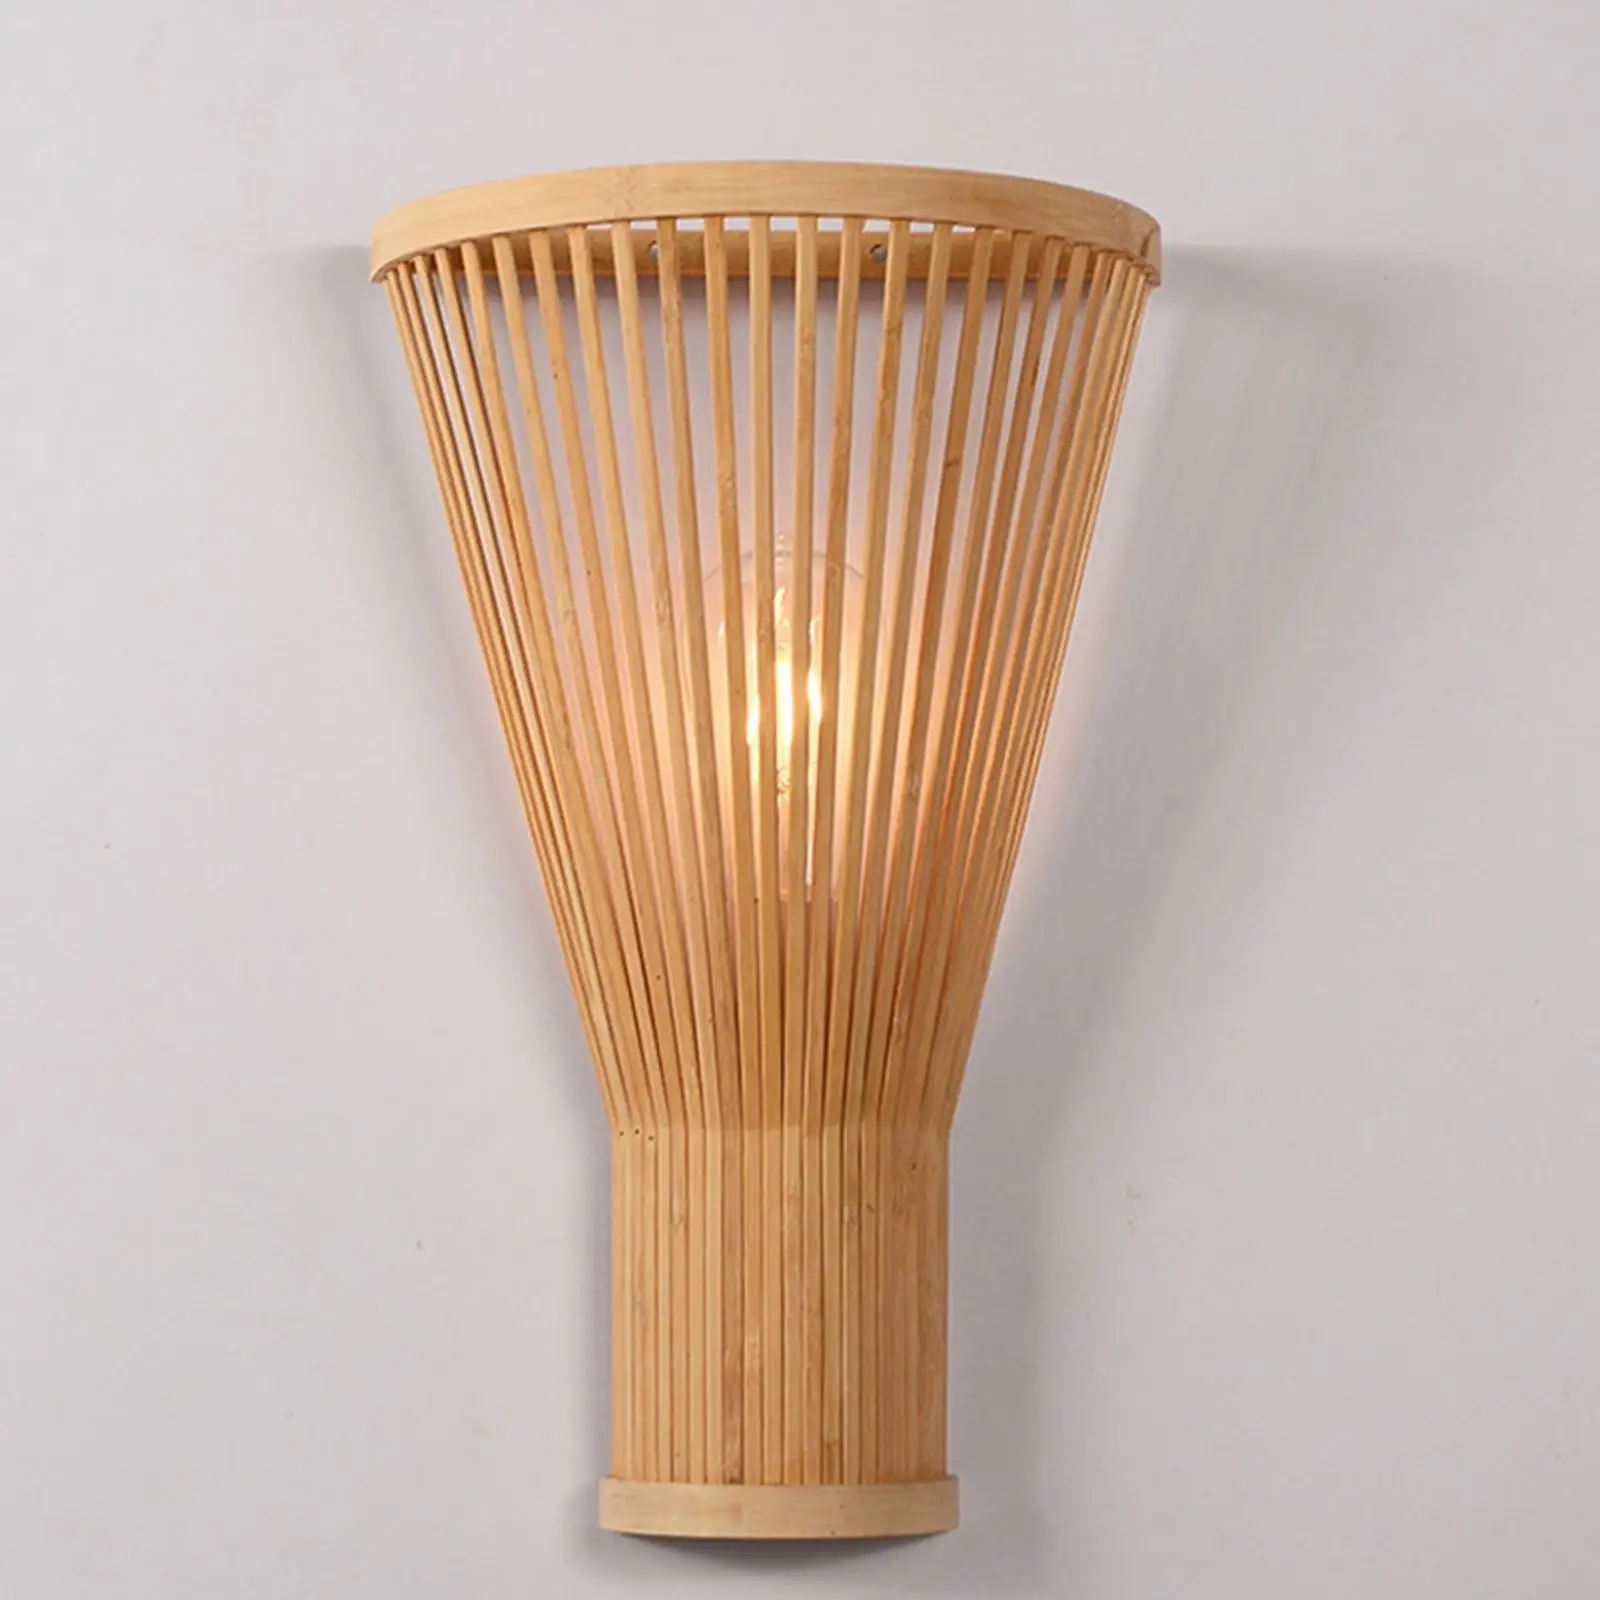 Retro Bamboo Wickert Wall Lamp Sconce LED E27 Rattan Shade Woven for Decor